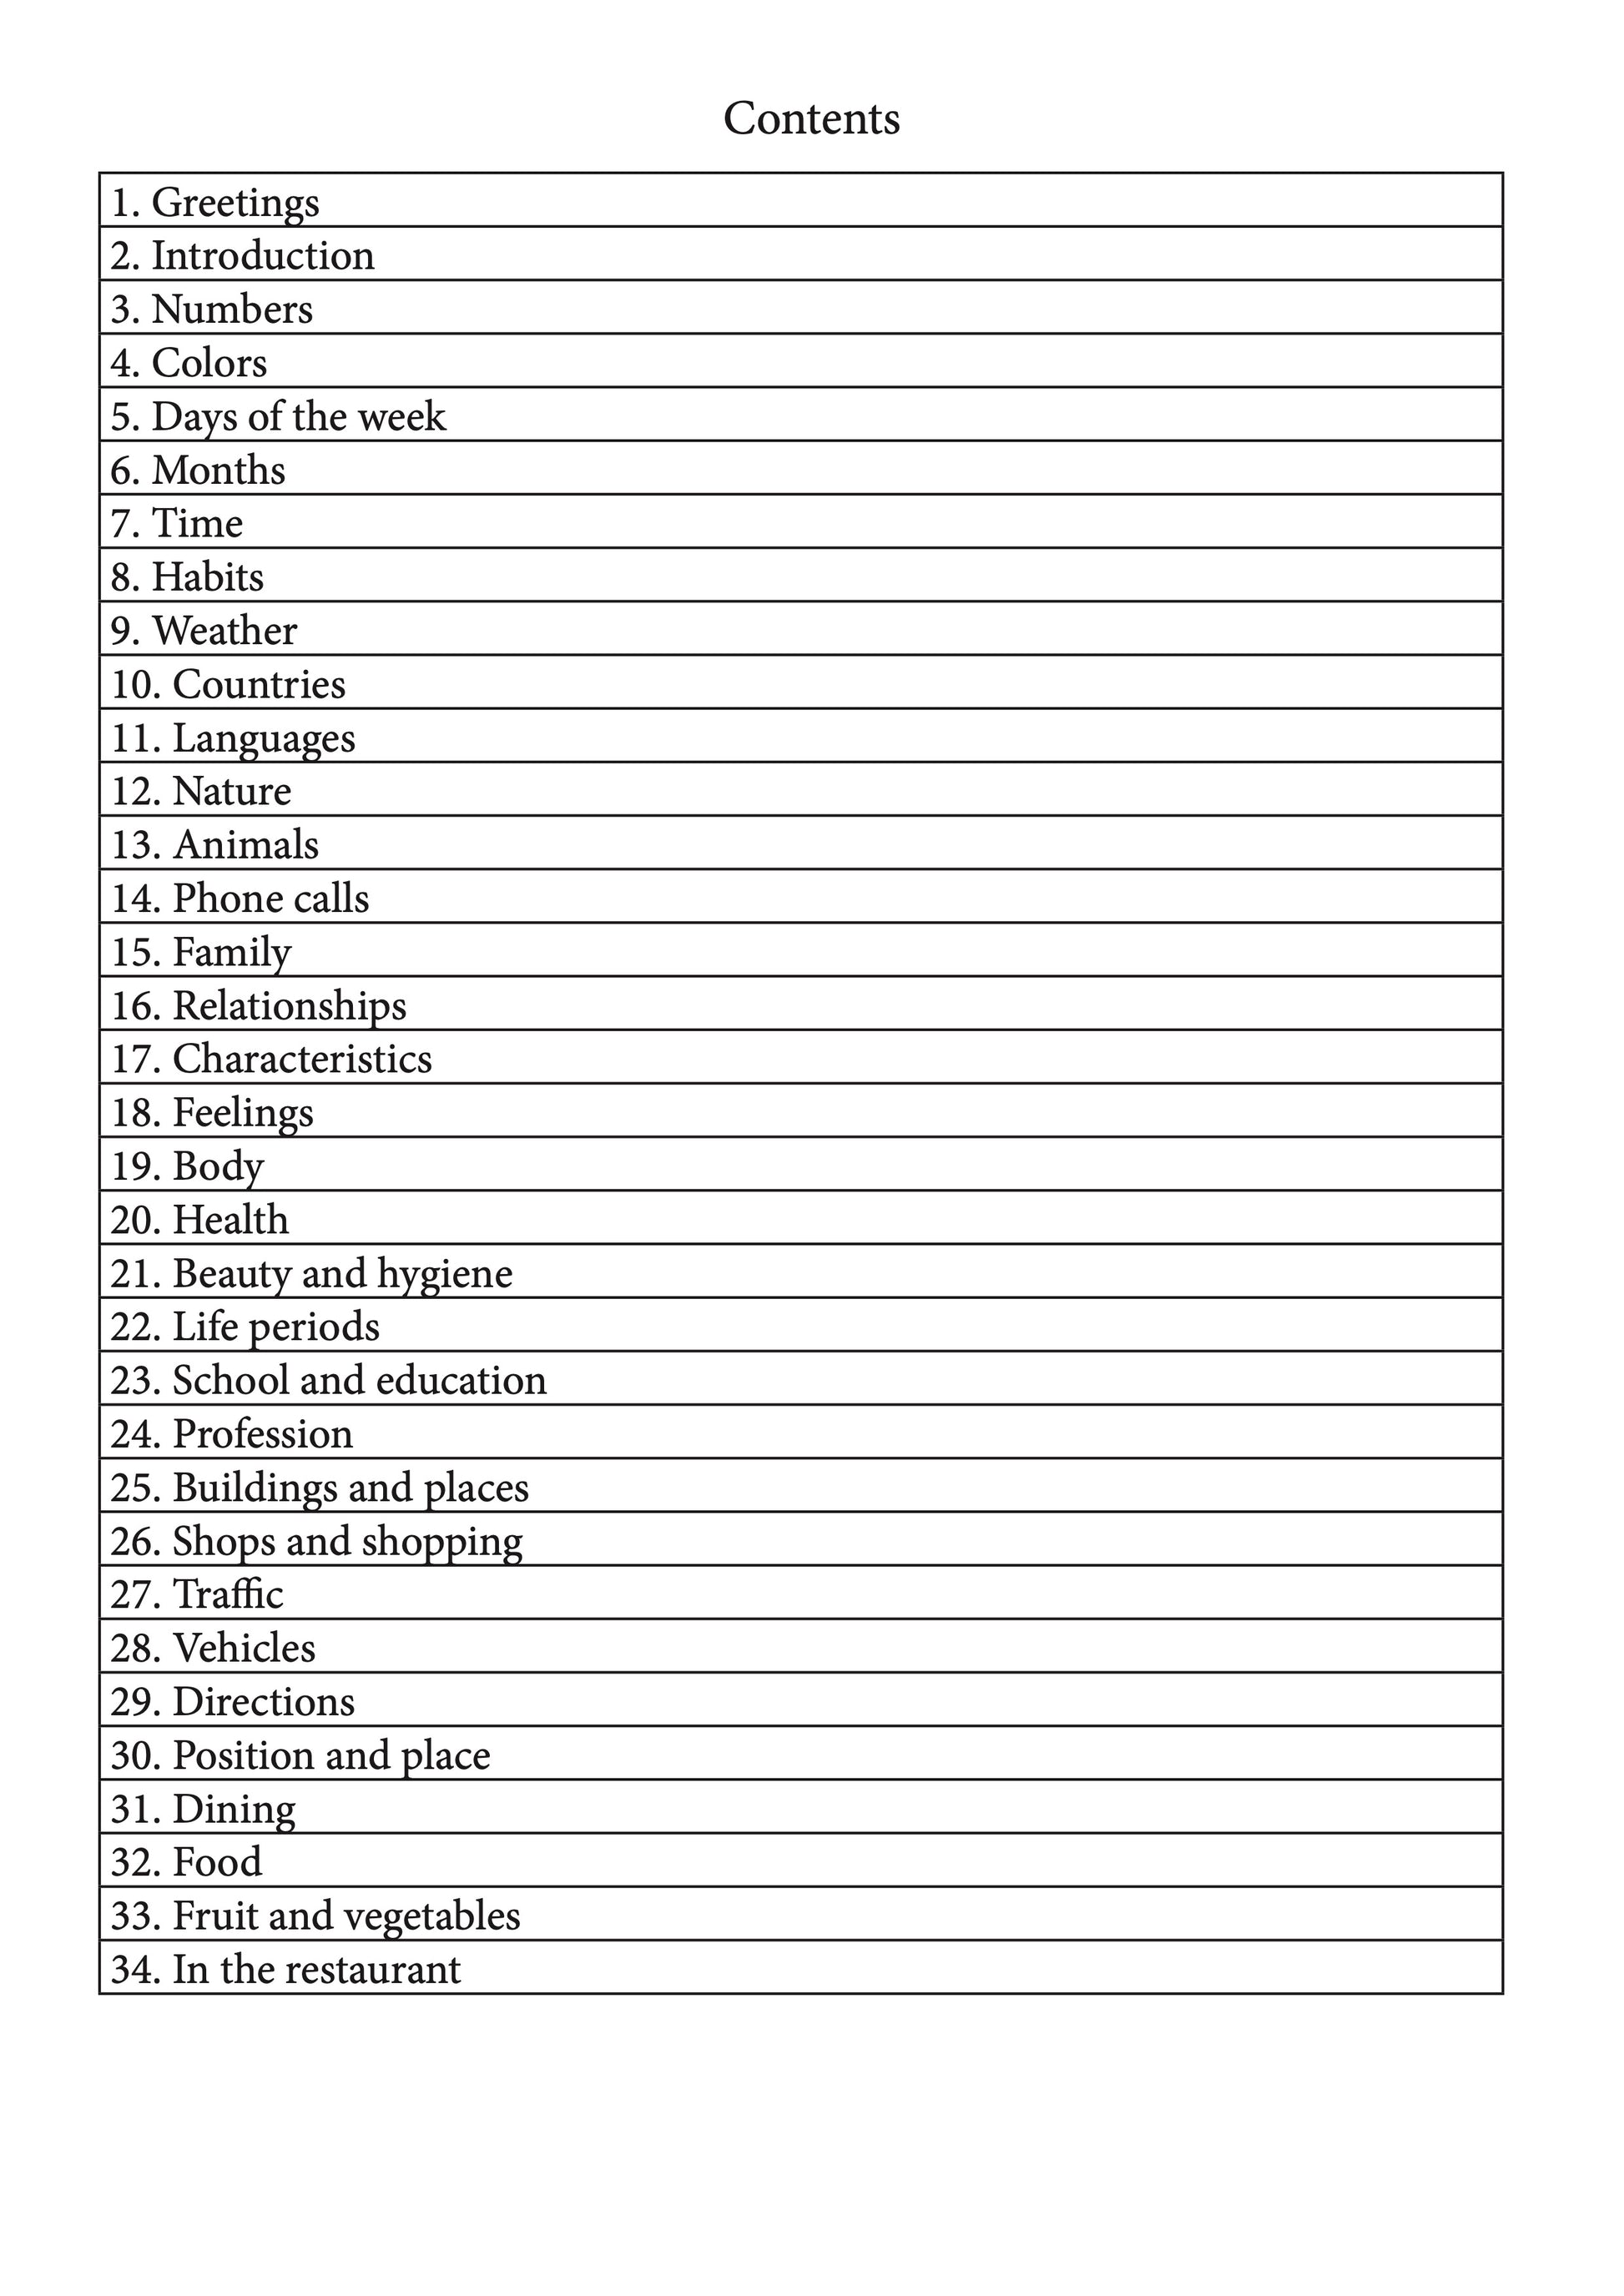 Warlpiri language learning notebook contents page 1